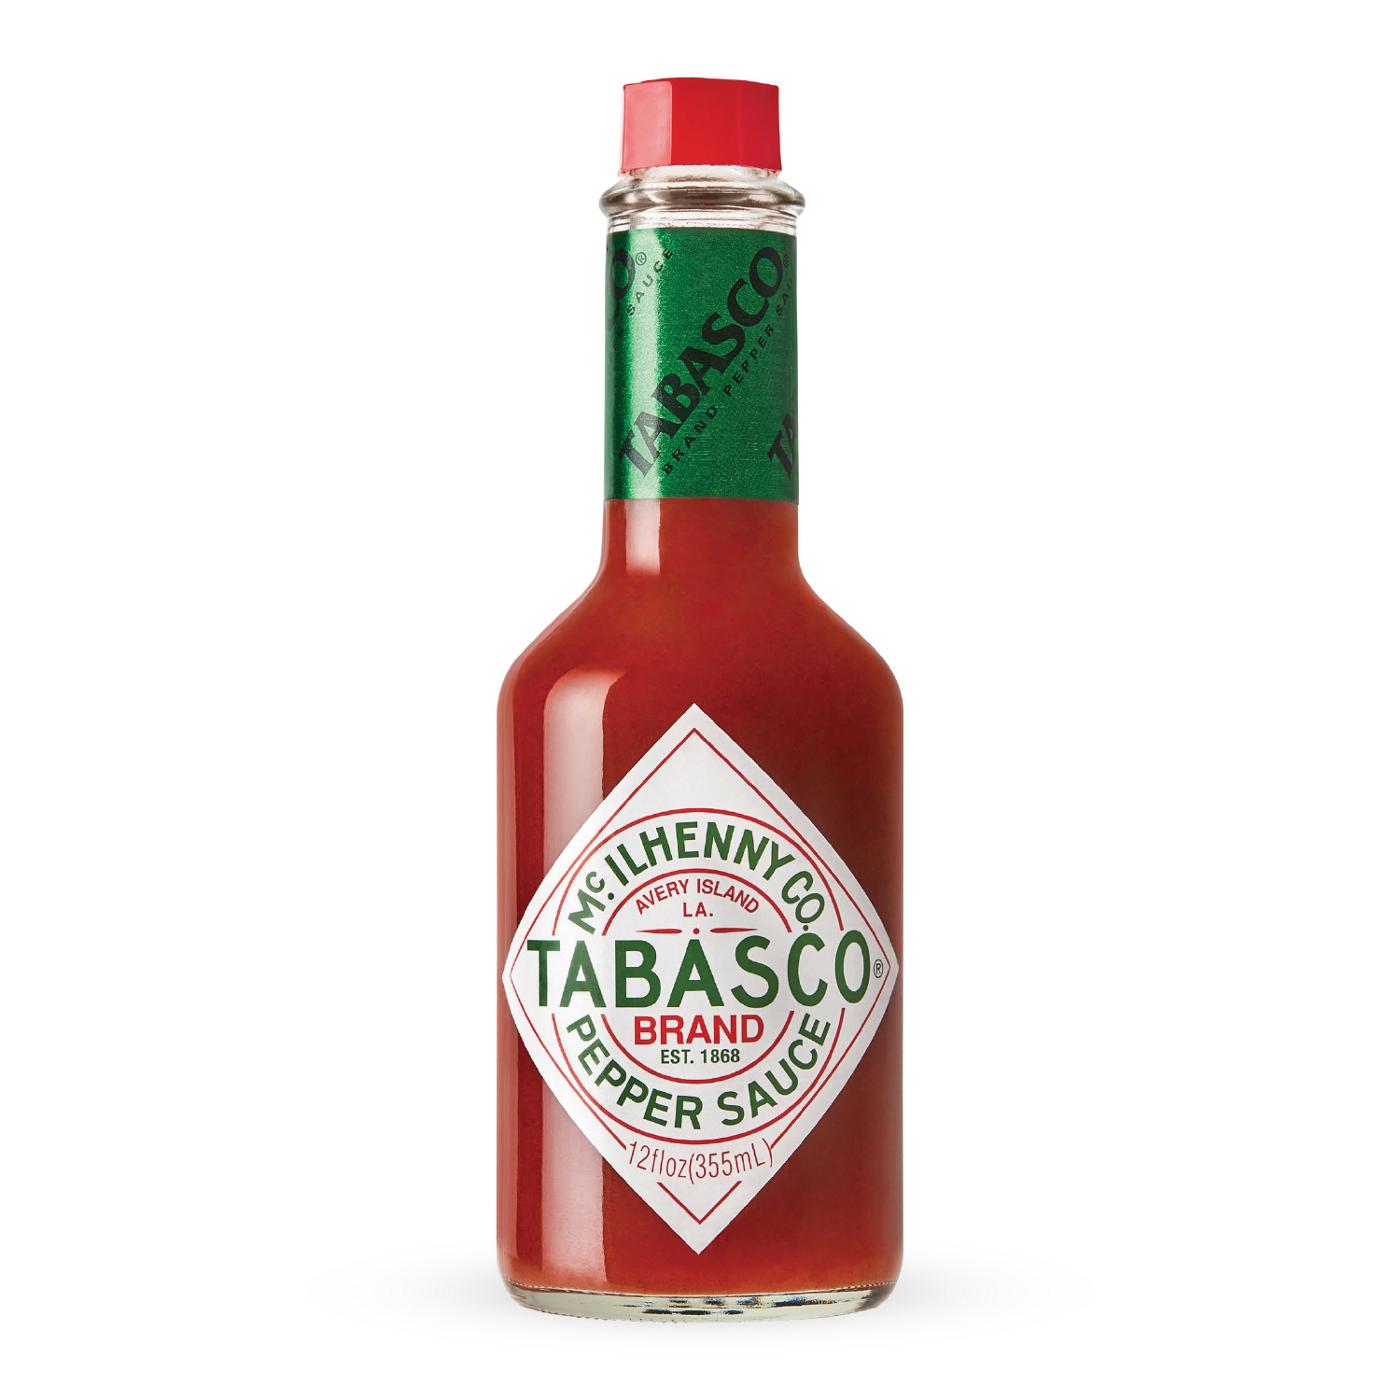 Tabasco Original Red Pepper Sauce; image 1 of 8